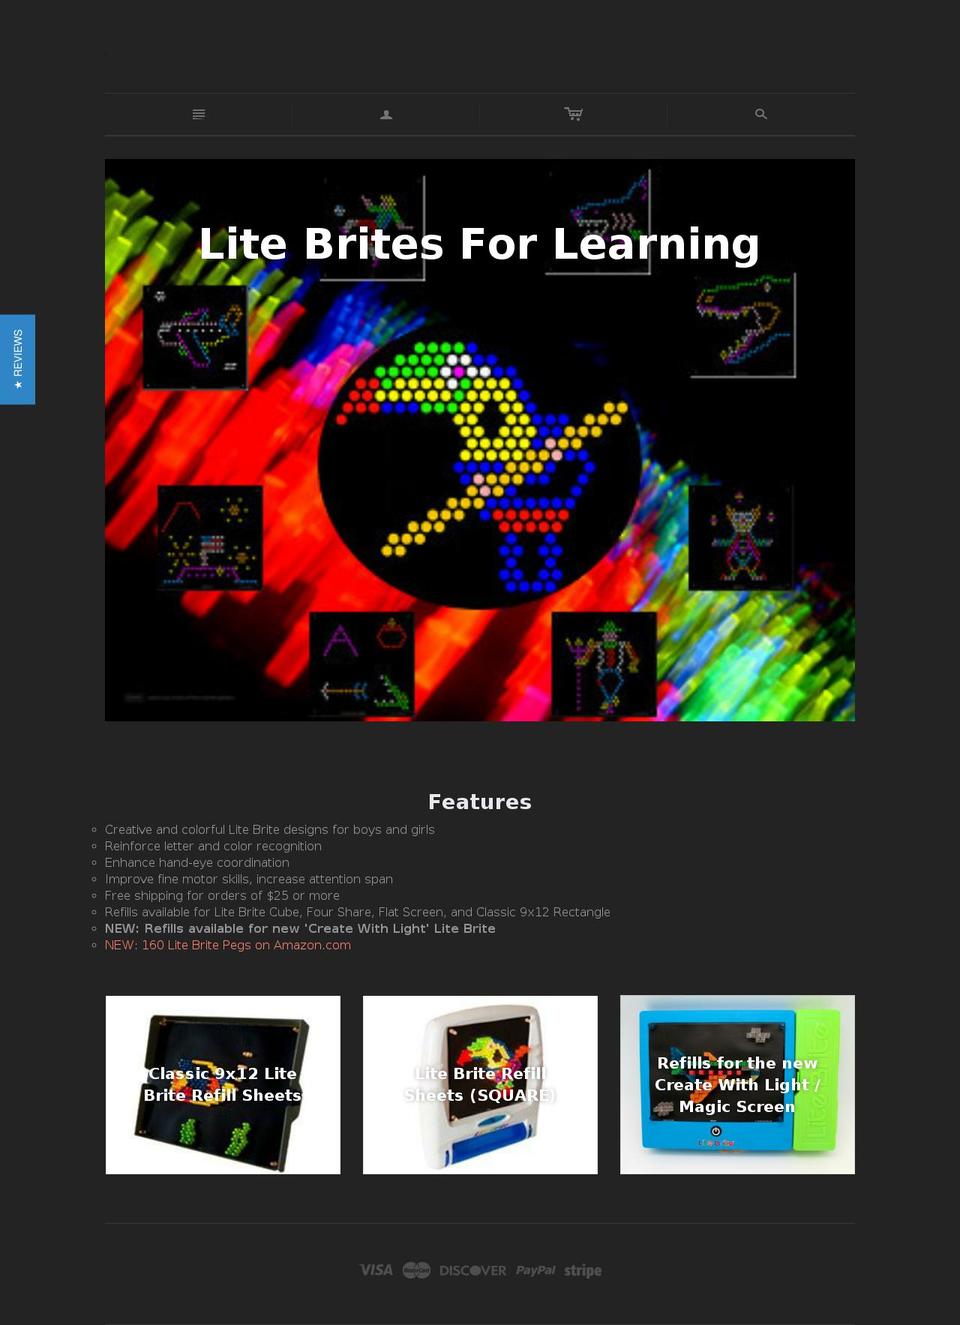 litebritesforlearning.com shopify website screenshot